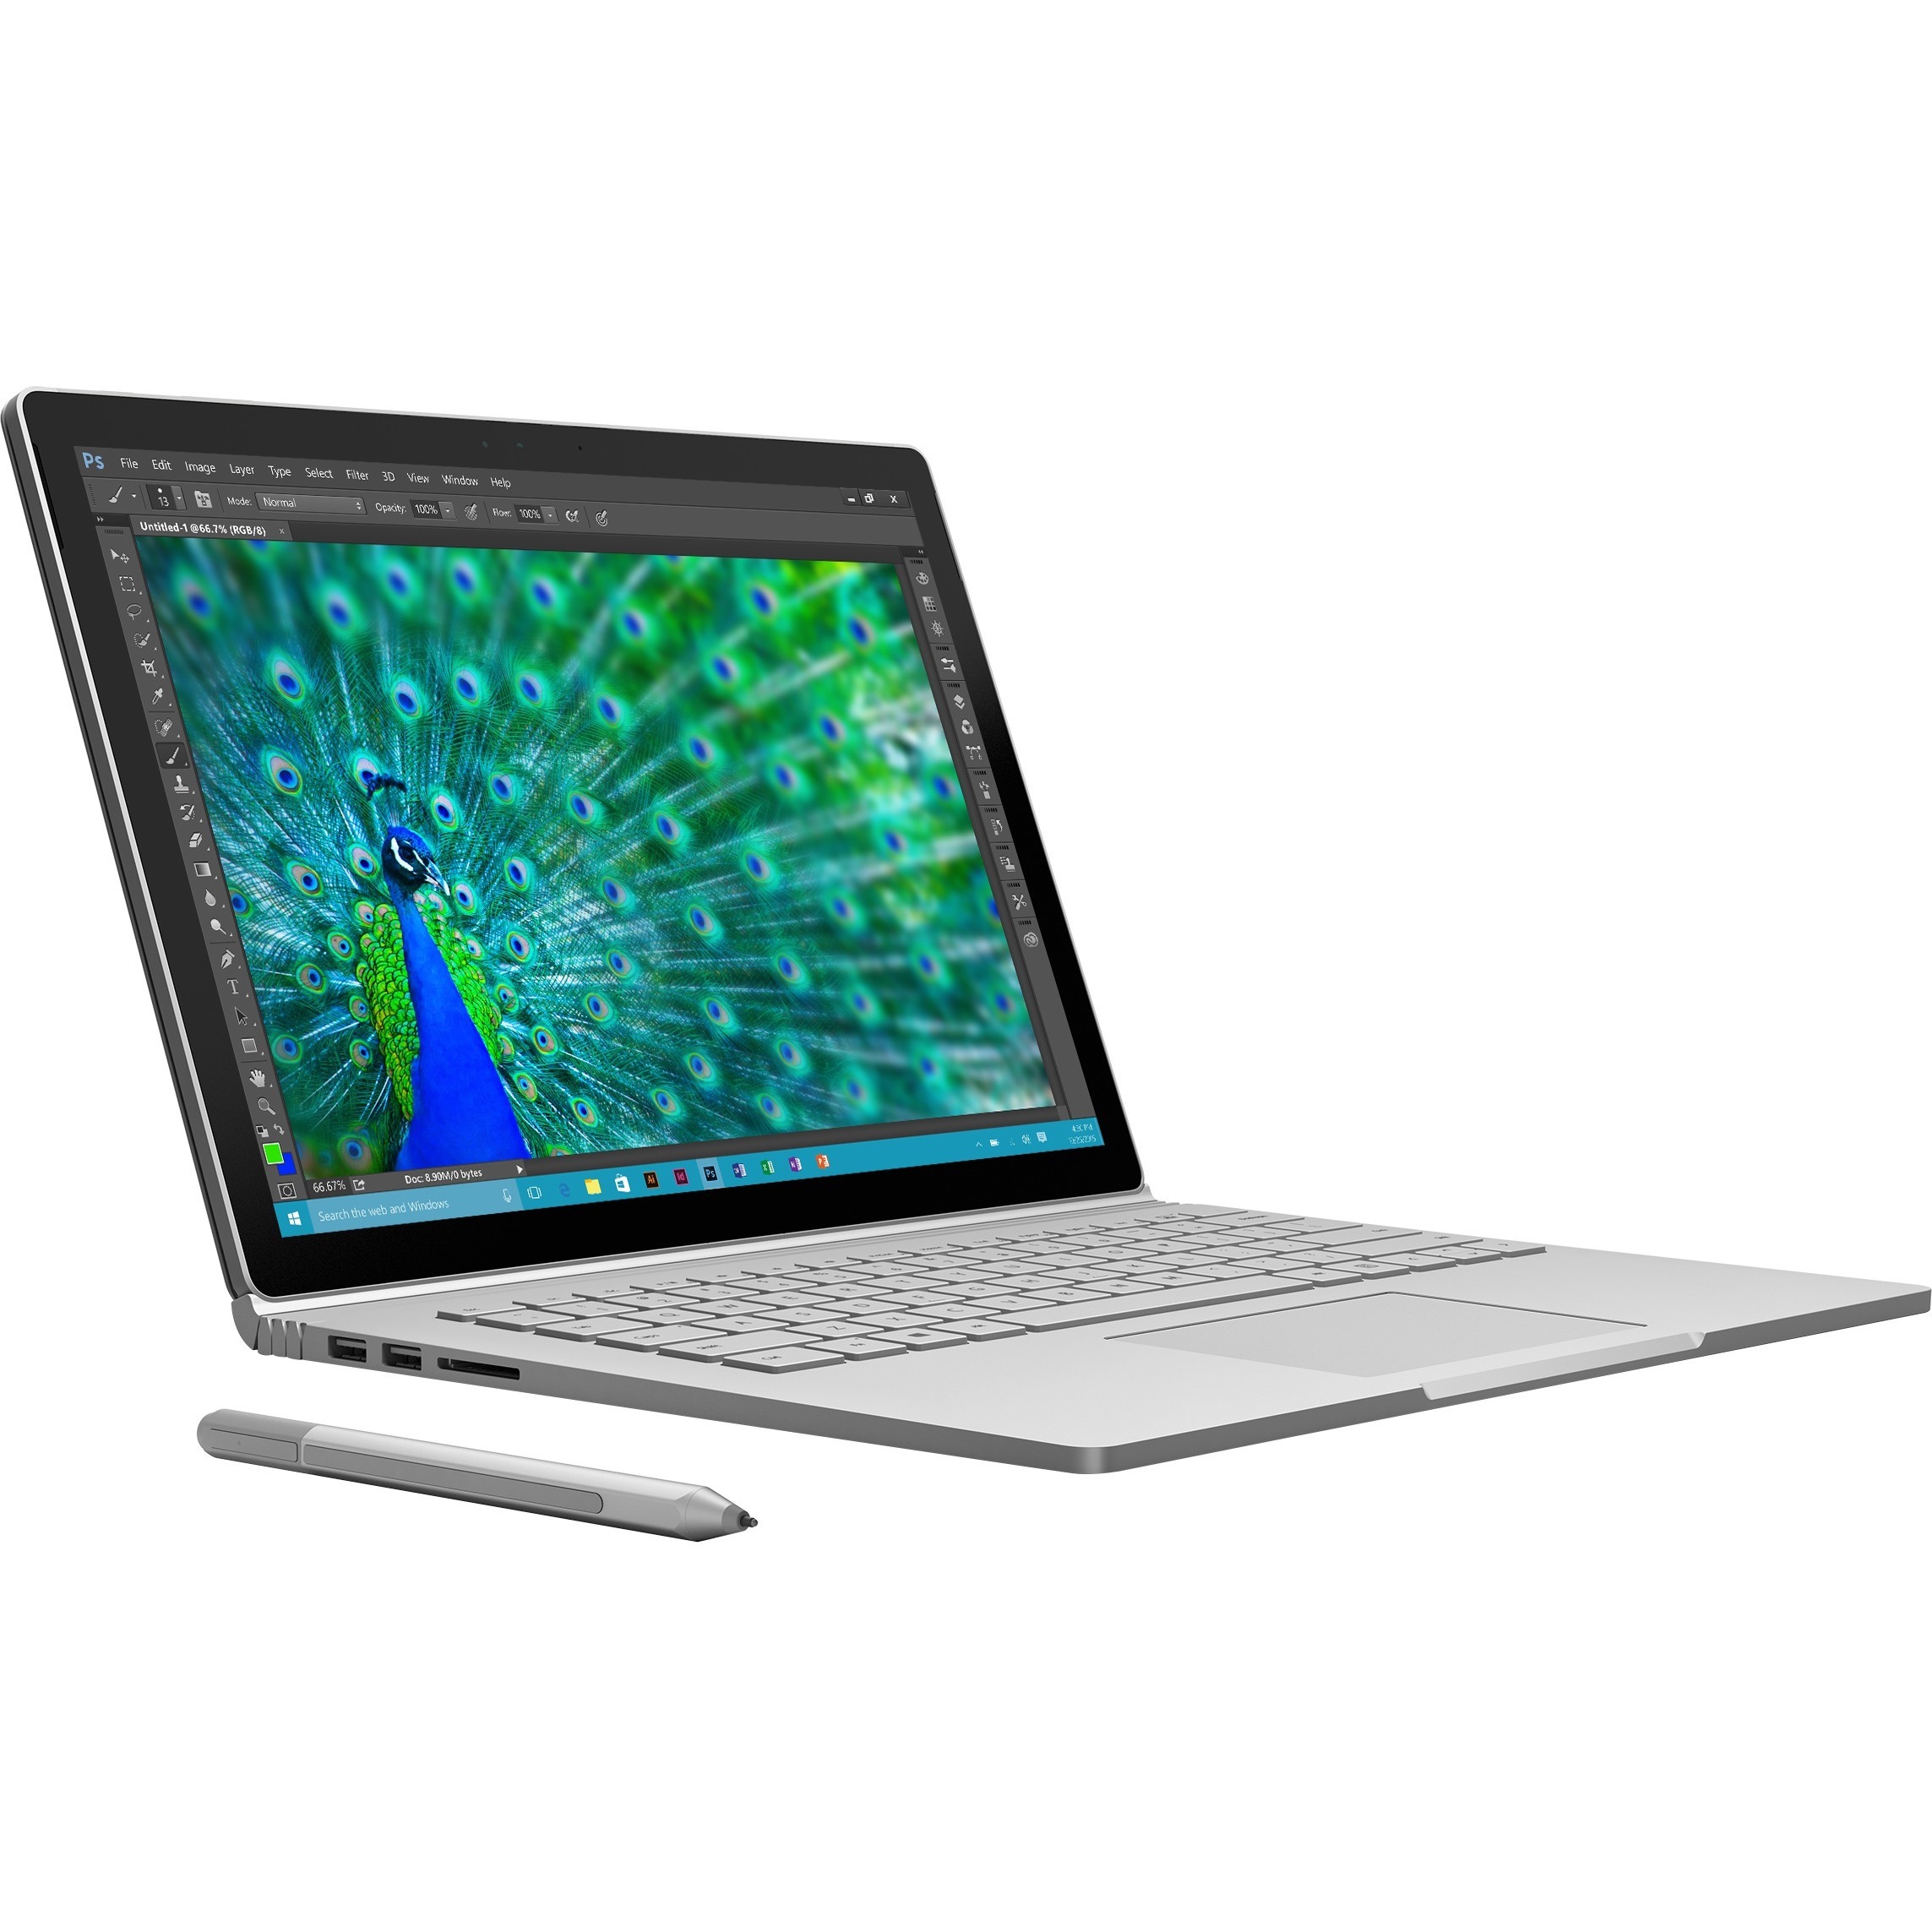 Microsoft Surface Book 13.5" Touchscreen 2-in-1 Laptop, Intel Core i7 i7-6600U, 16GB RAM, 512GB SSD, Windows 10 Pro, Silver